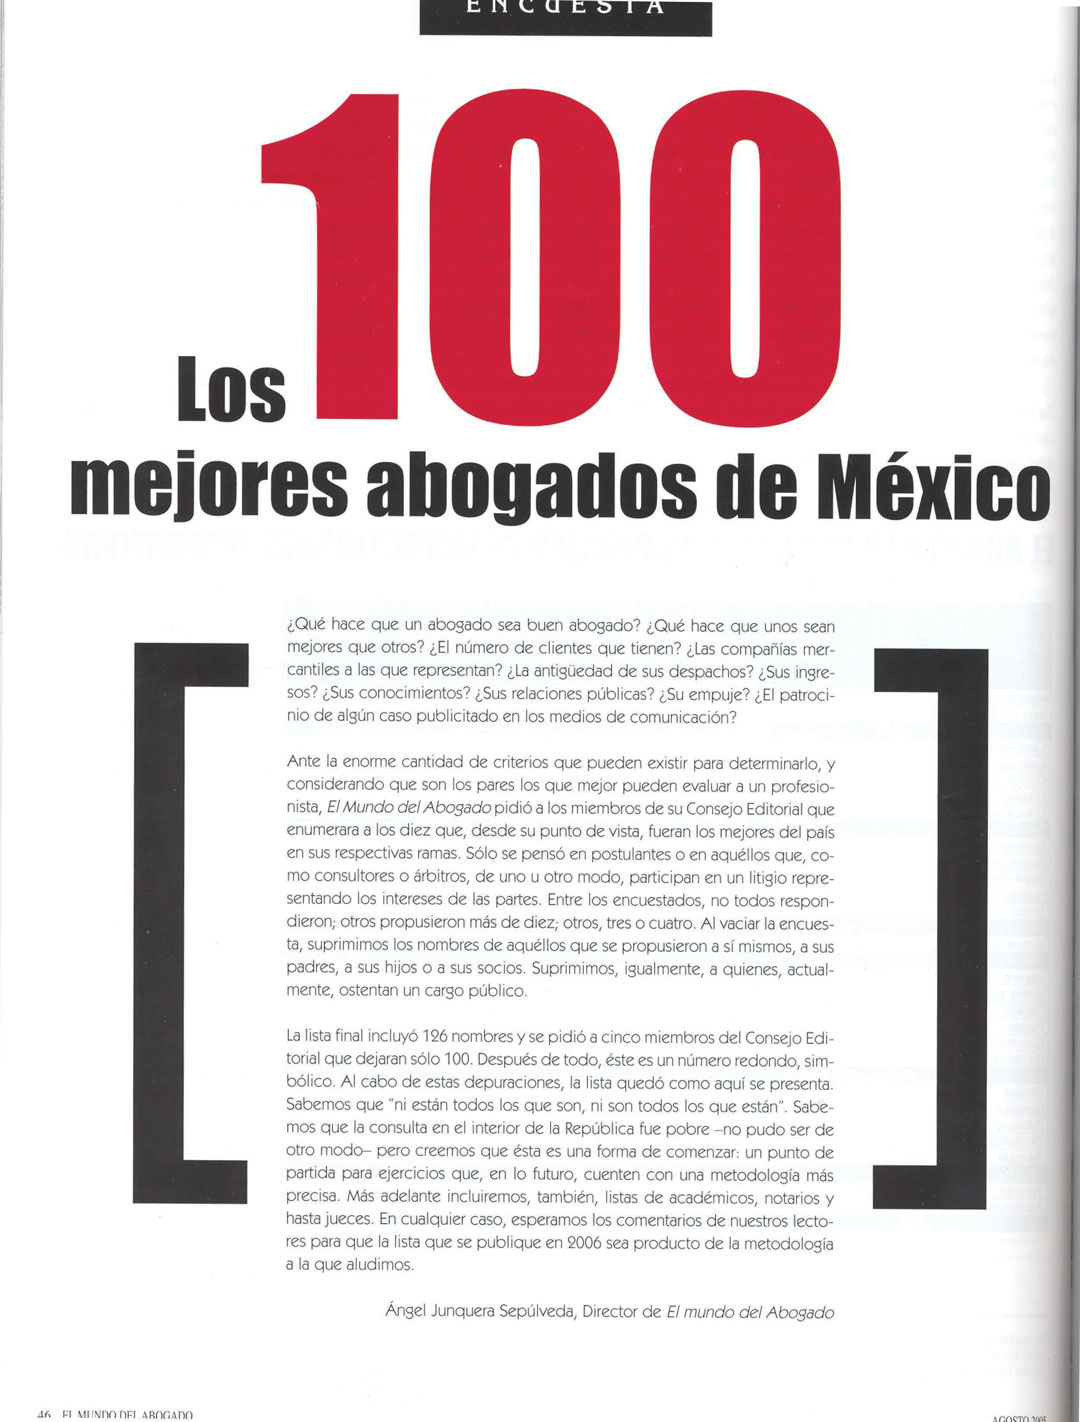 Los 100 mejores abogados de México Francisco Riquelme Gallardo